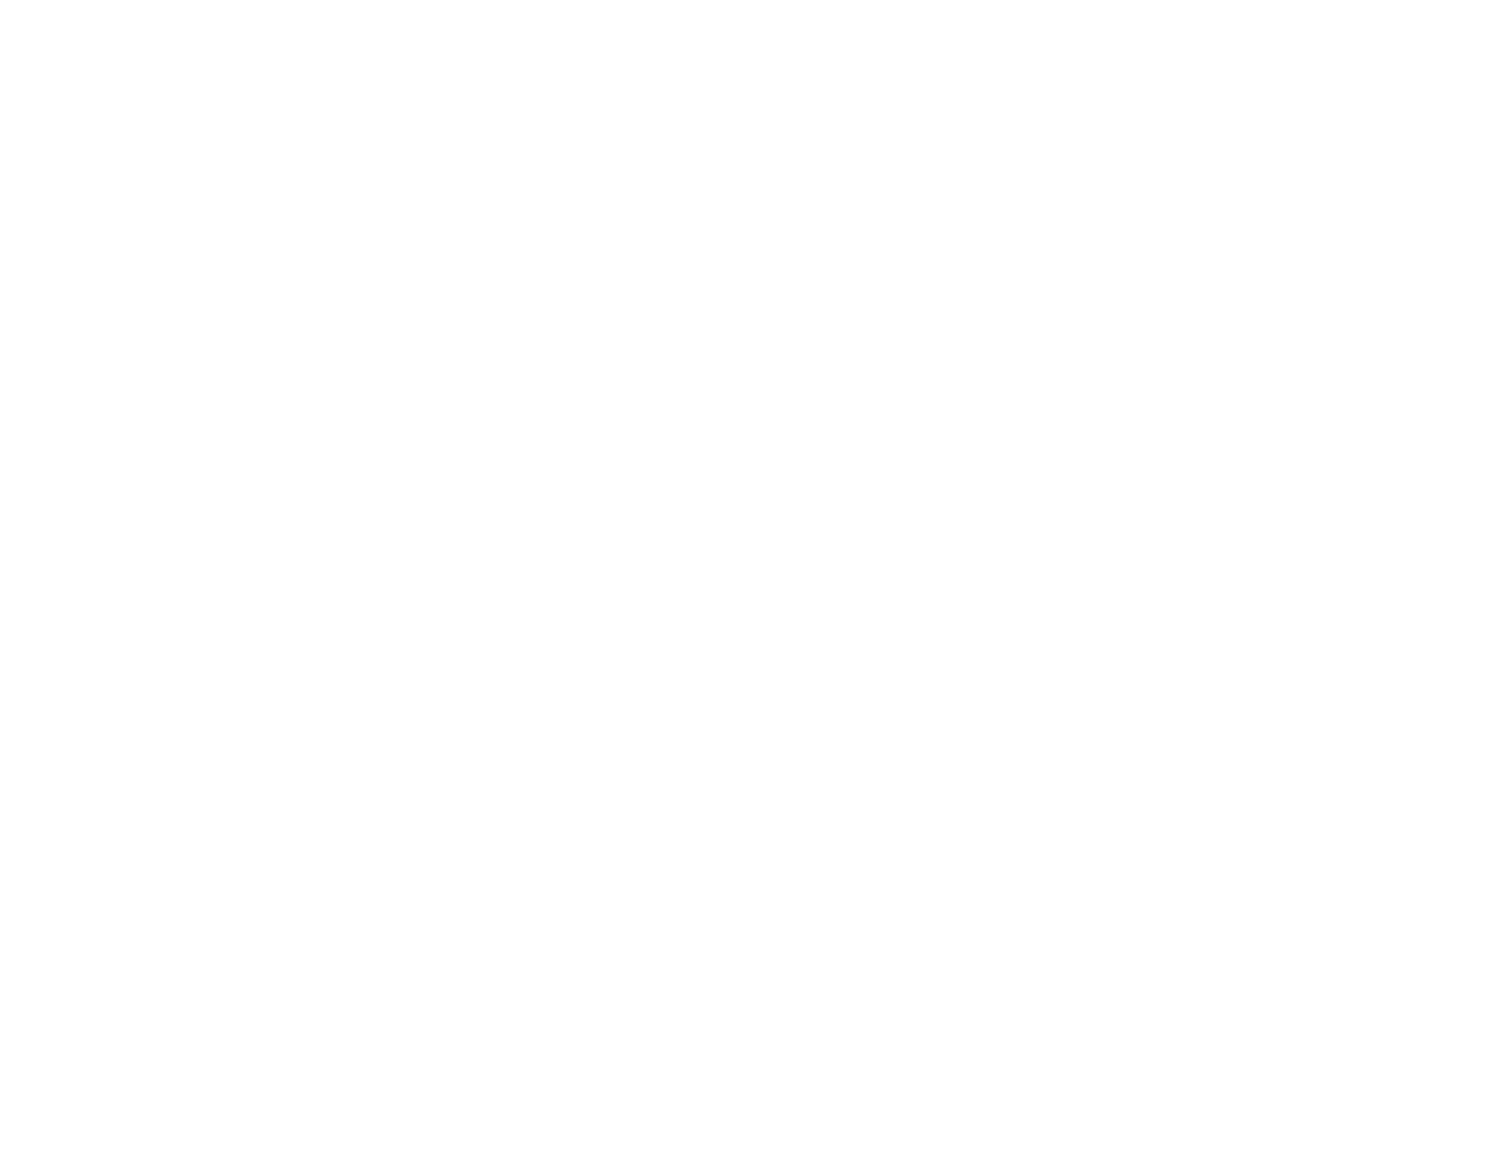  Velorean Productions